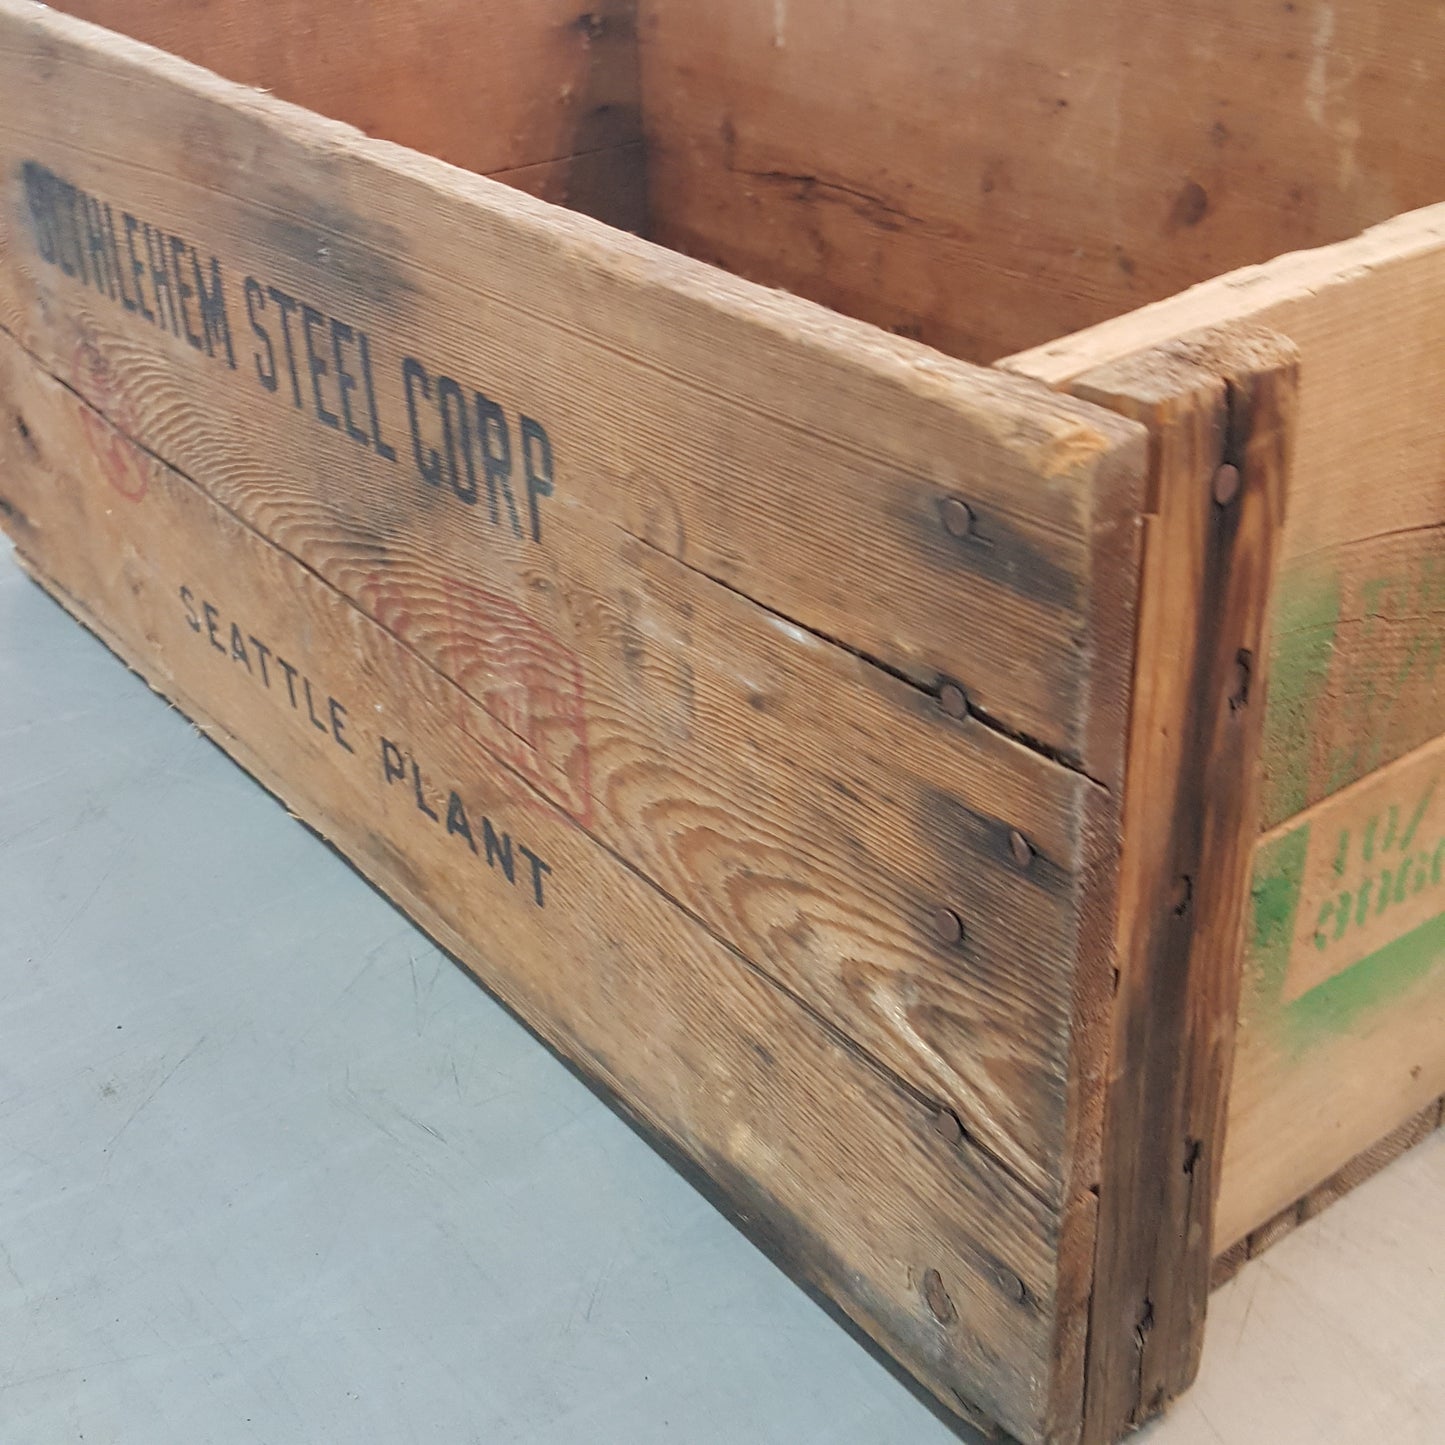 "Bethlehem Steel" Wooden Crate